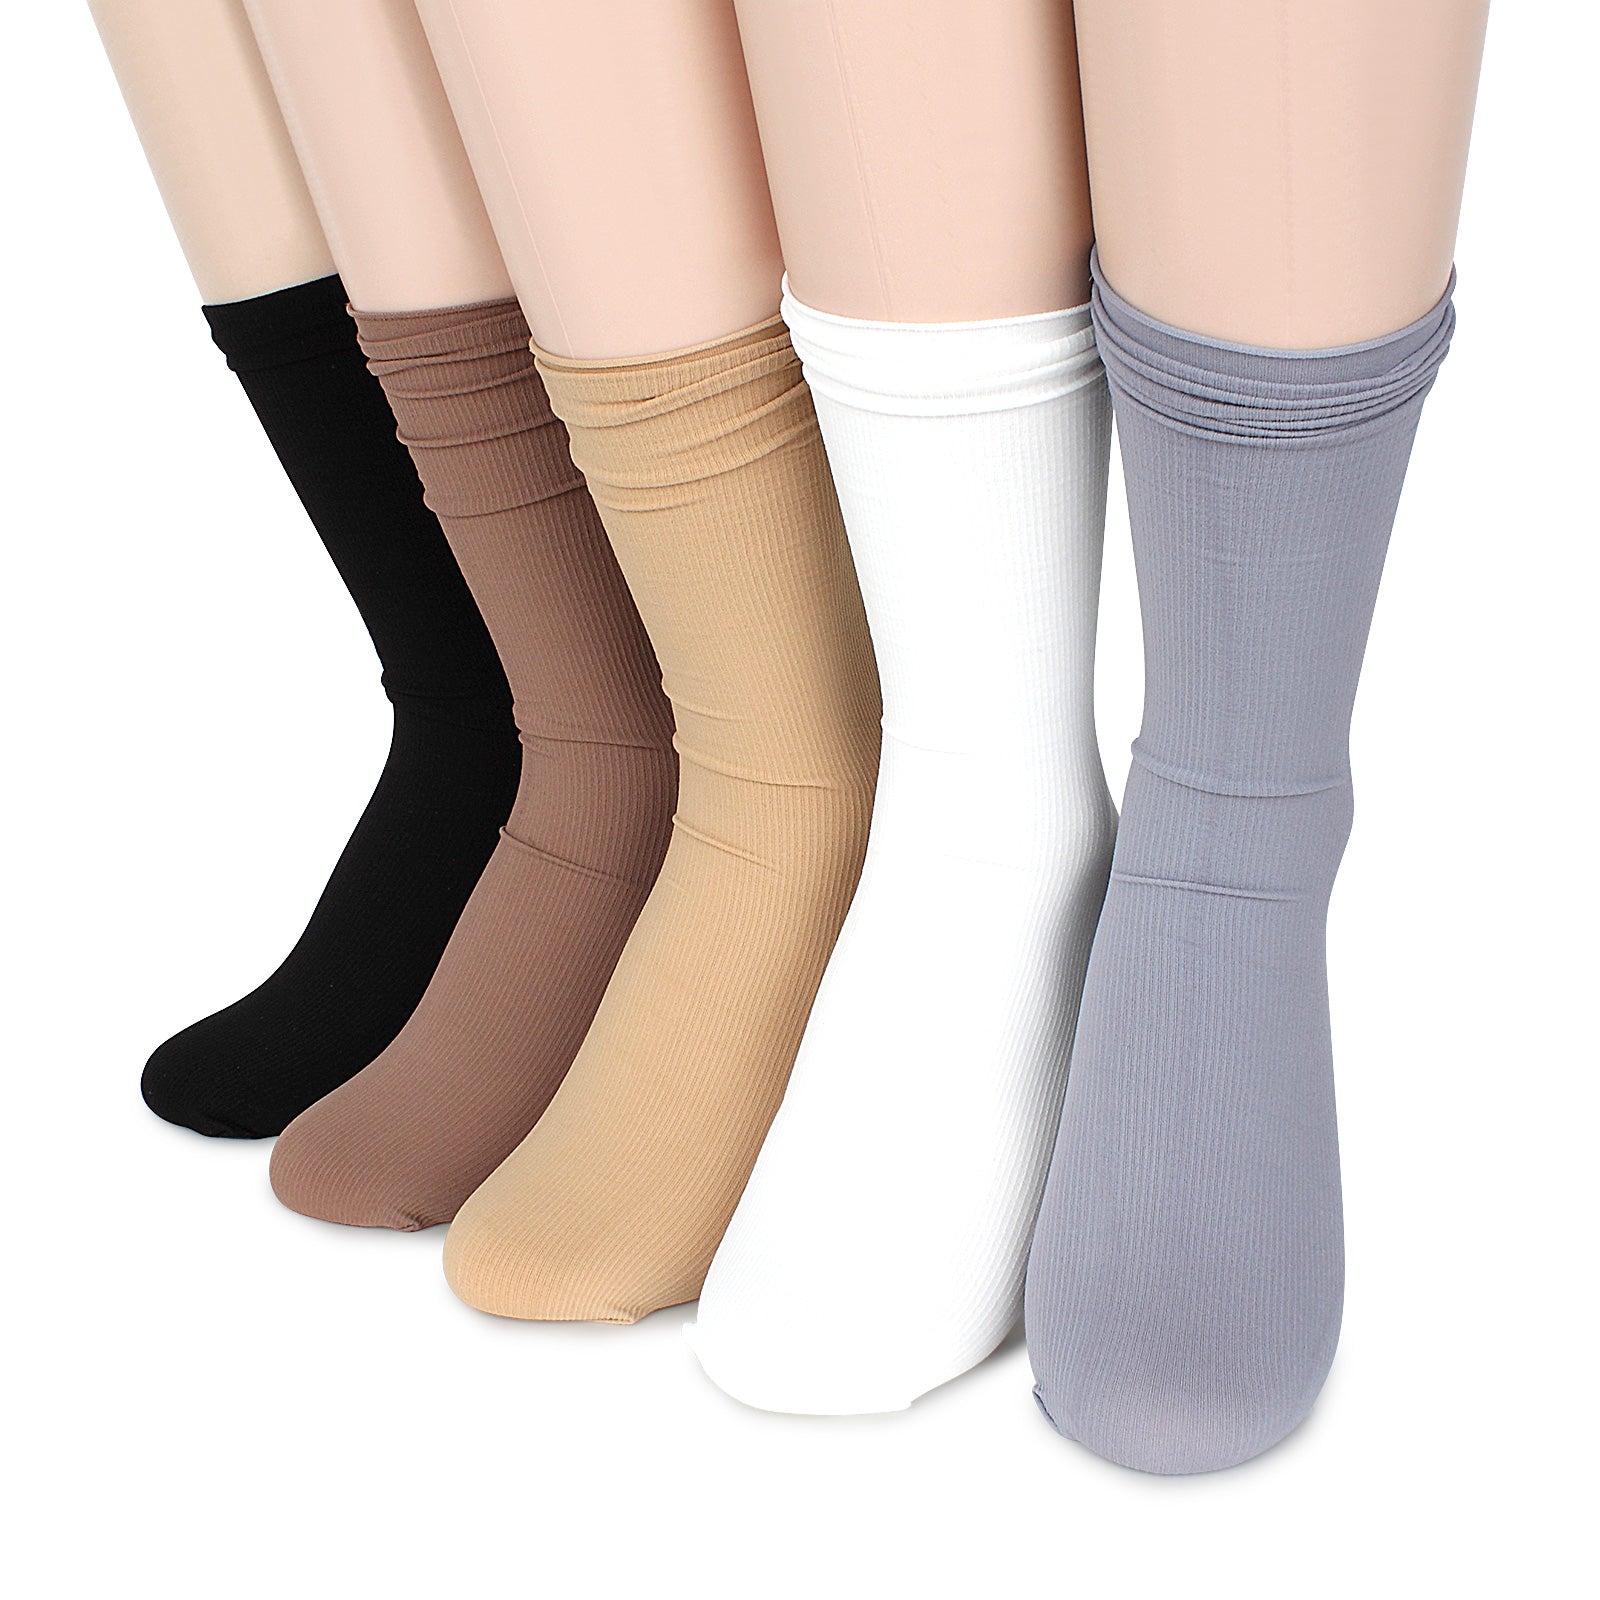 Basic high stockings women daily dress socks YI15